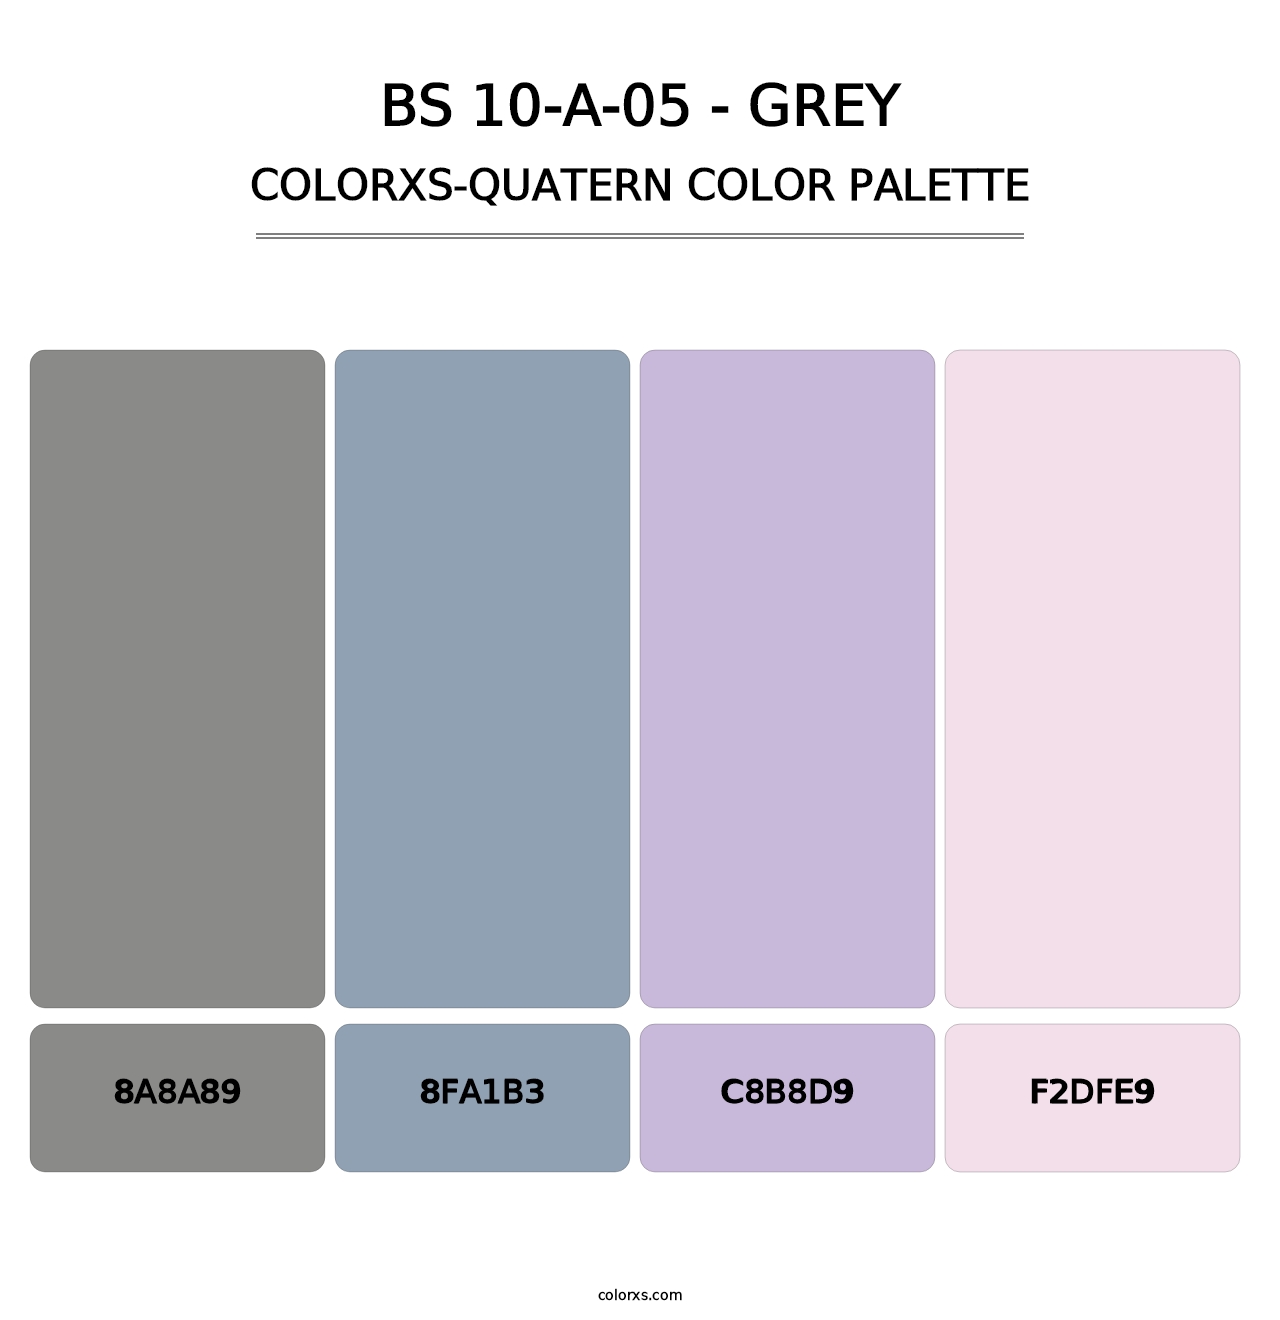 BS 10-A-05 - Grey - Colorxs Quatern Palette